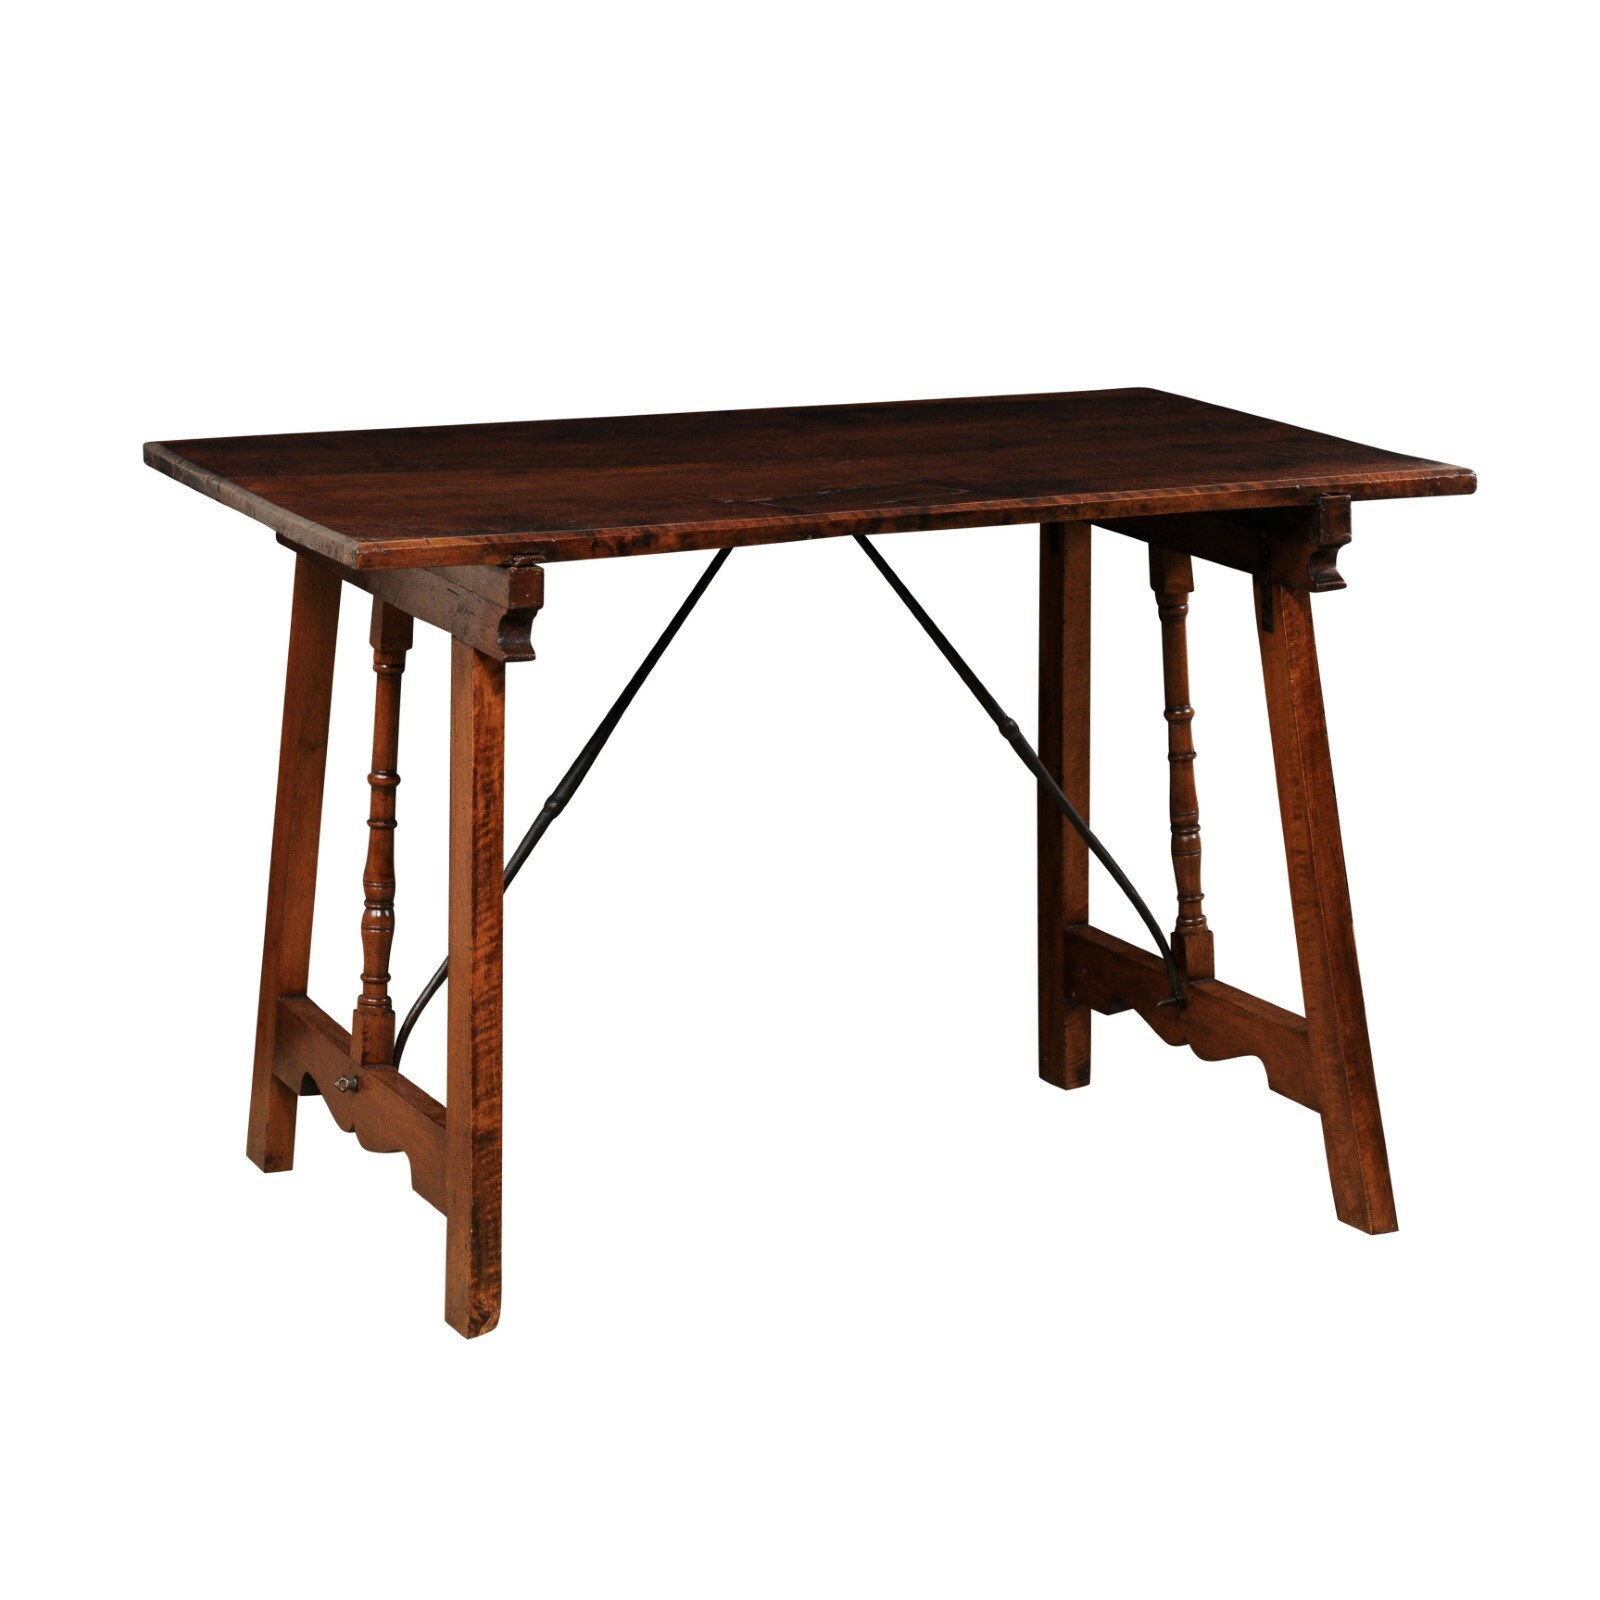 Spanish Walnut Stretcher Table, 19th C.